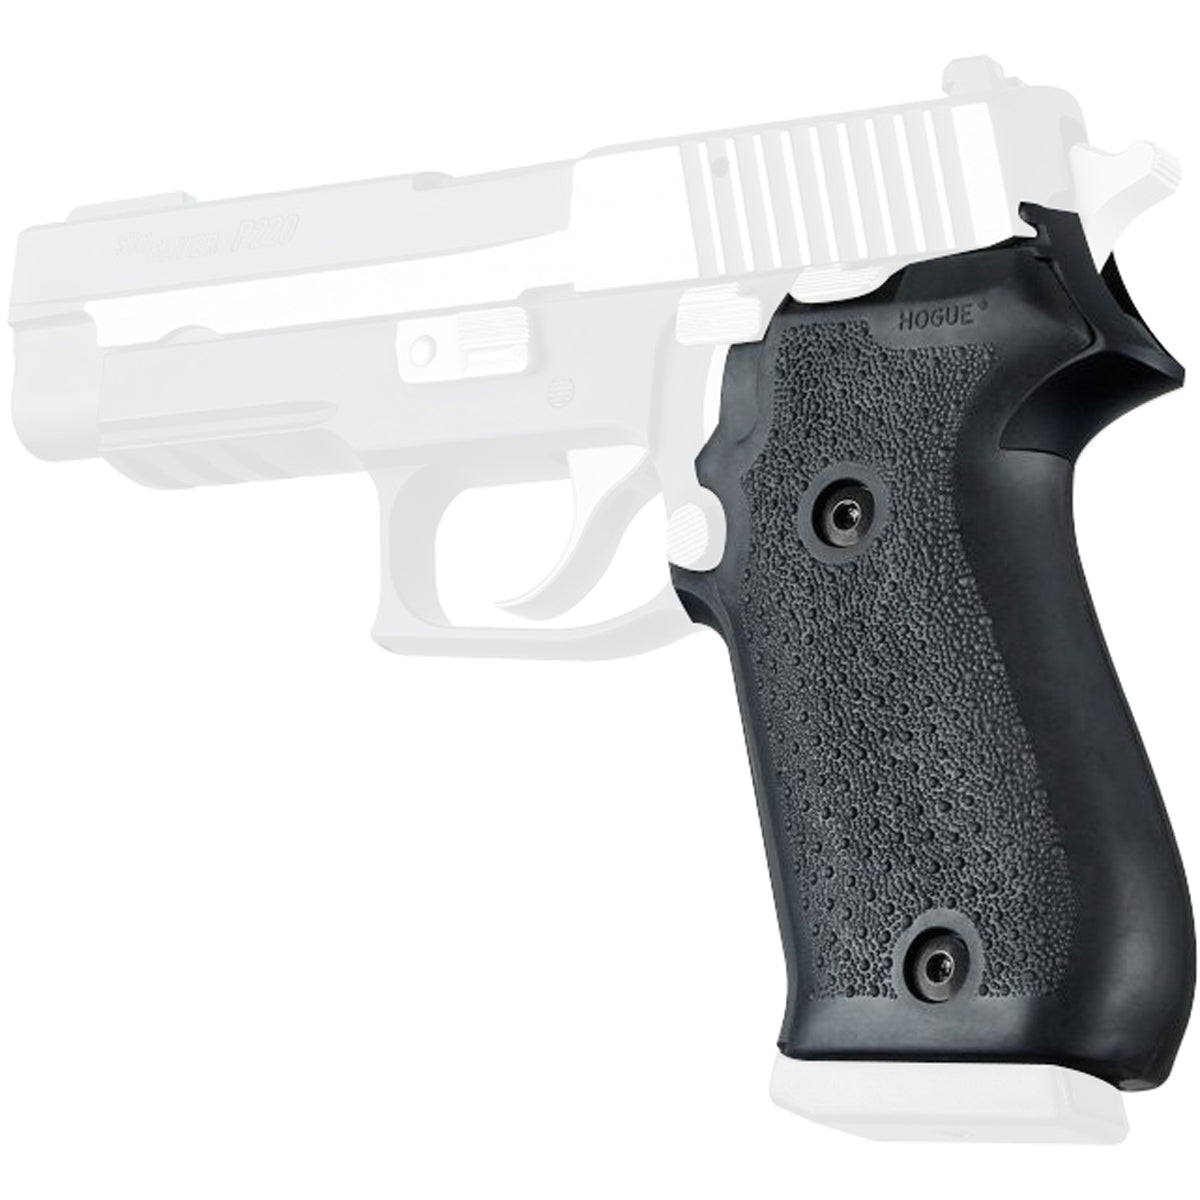 Hogue SIG P220 American DA/SA, DAK OverMolded Rubber Grip - Black Hogue